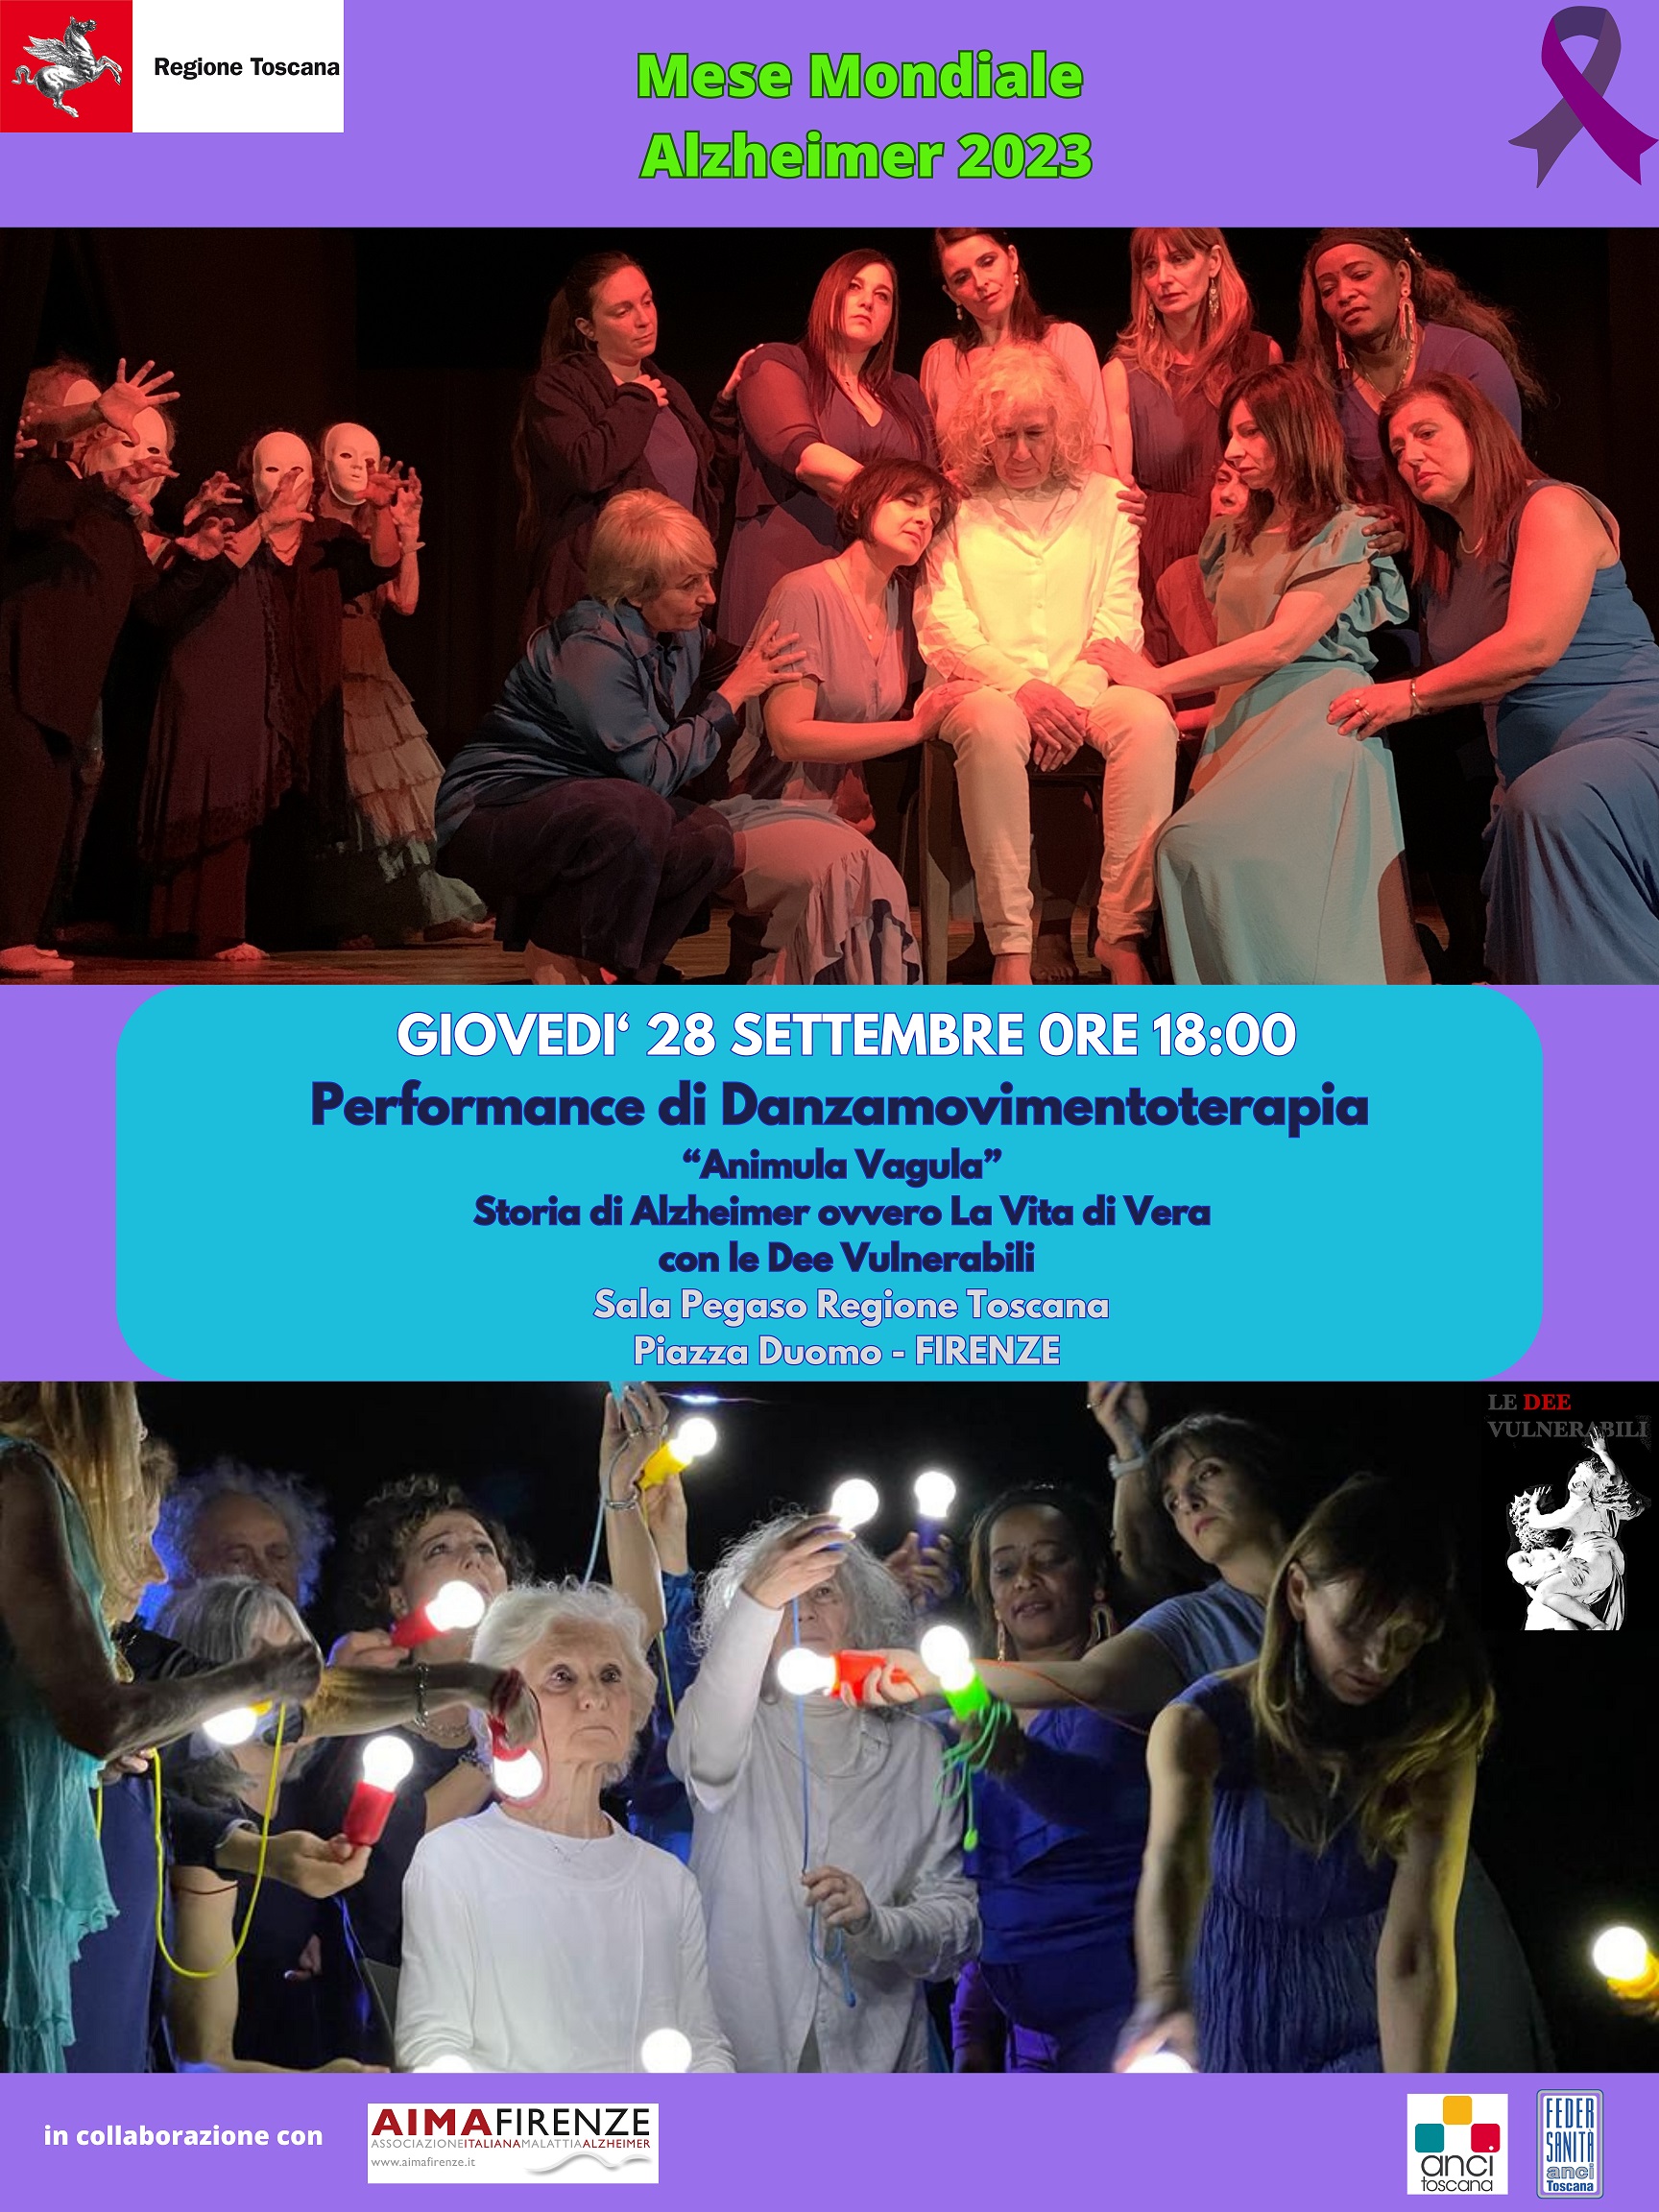 “Mese mondiale dell’Alzheimer”, giovedì 28 performance in palazzo Strozzi Sacrati